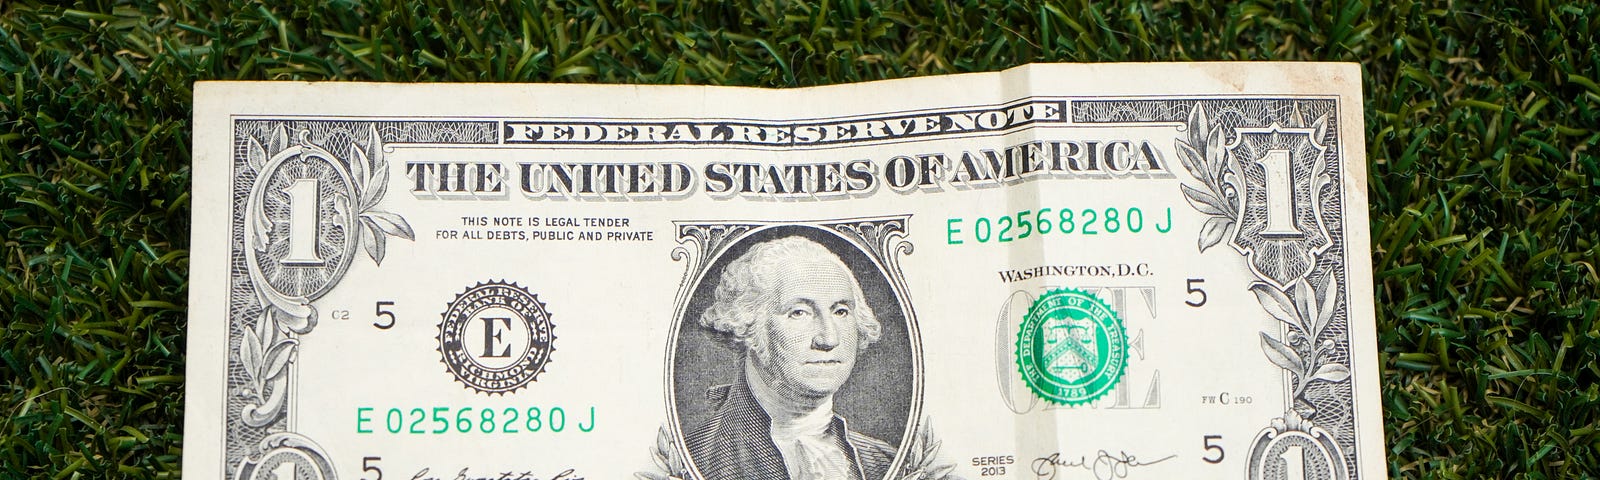 A US 1 dollar bill